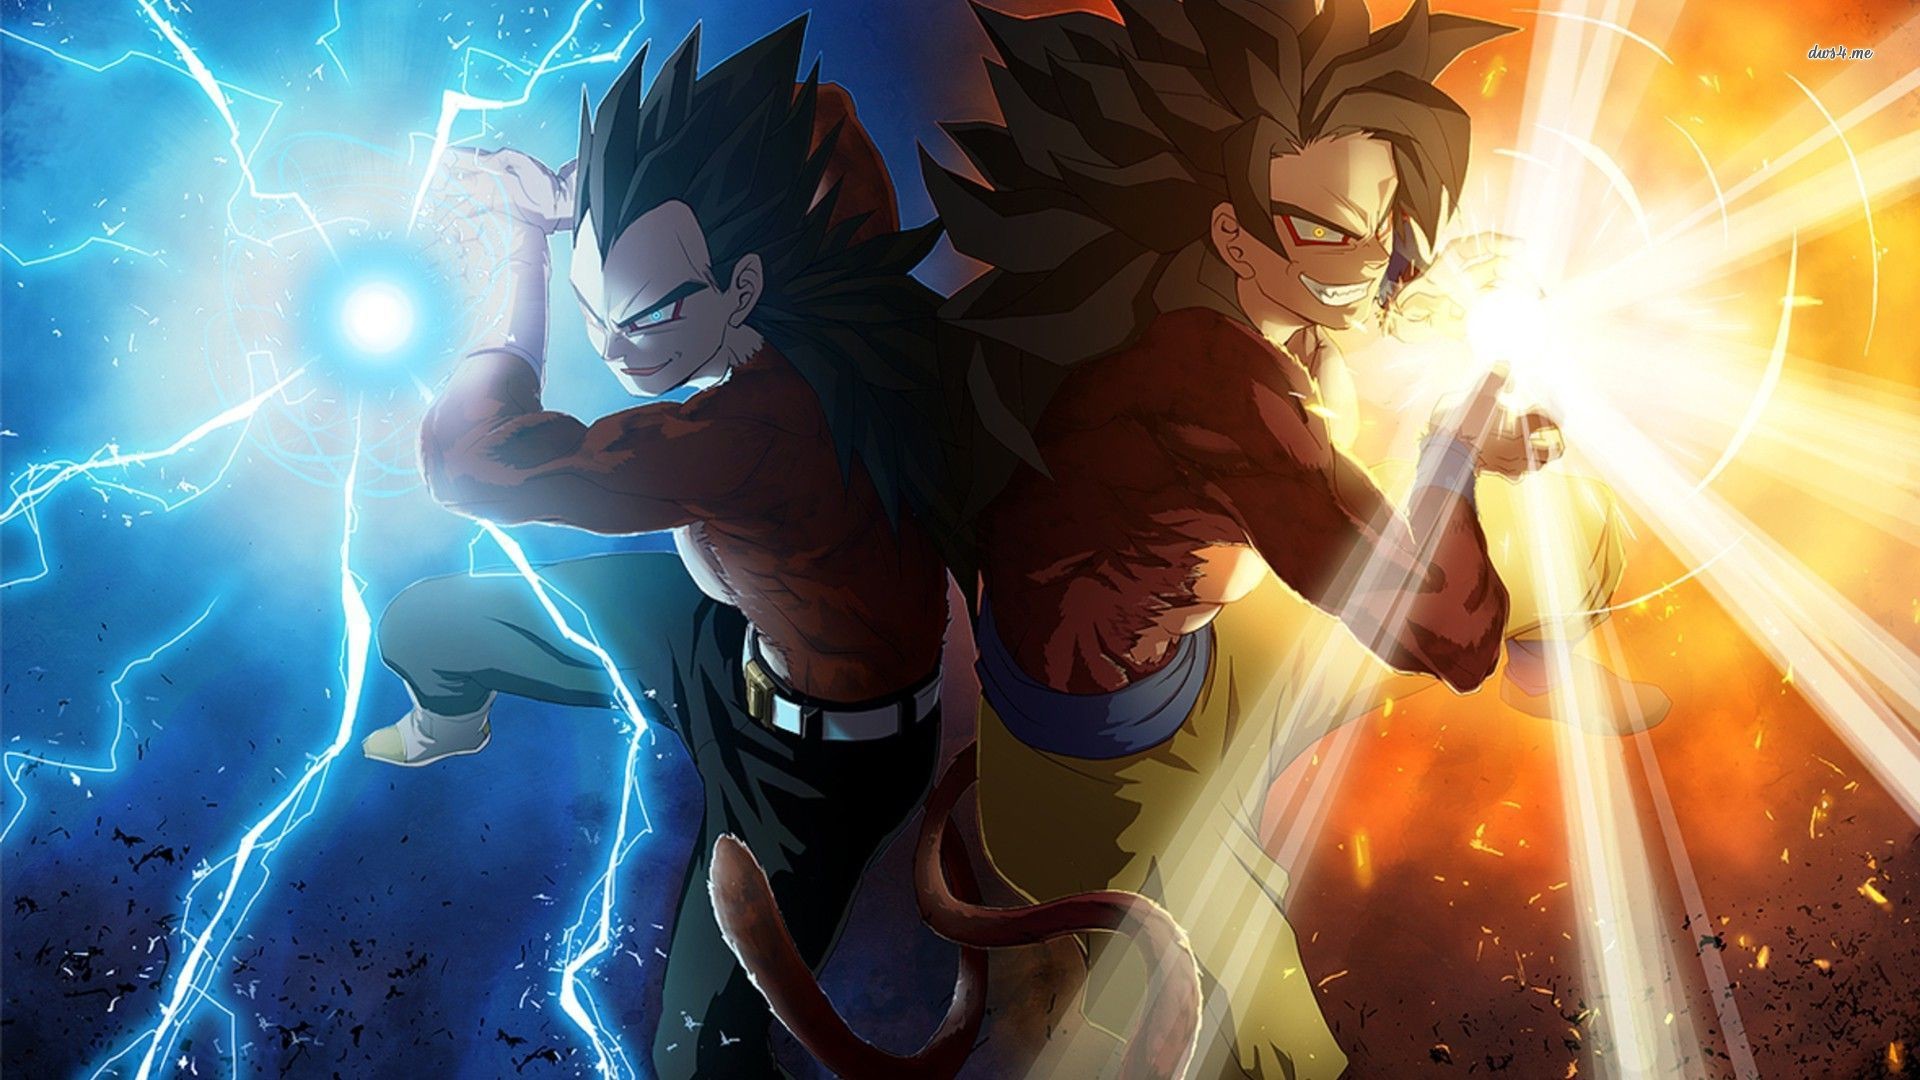 HD Super Saiyan 4 Vegeta and Goku Wallpaper Full HD